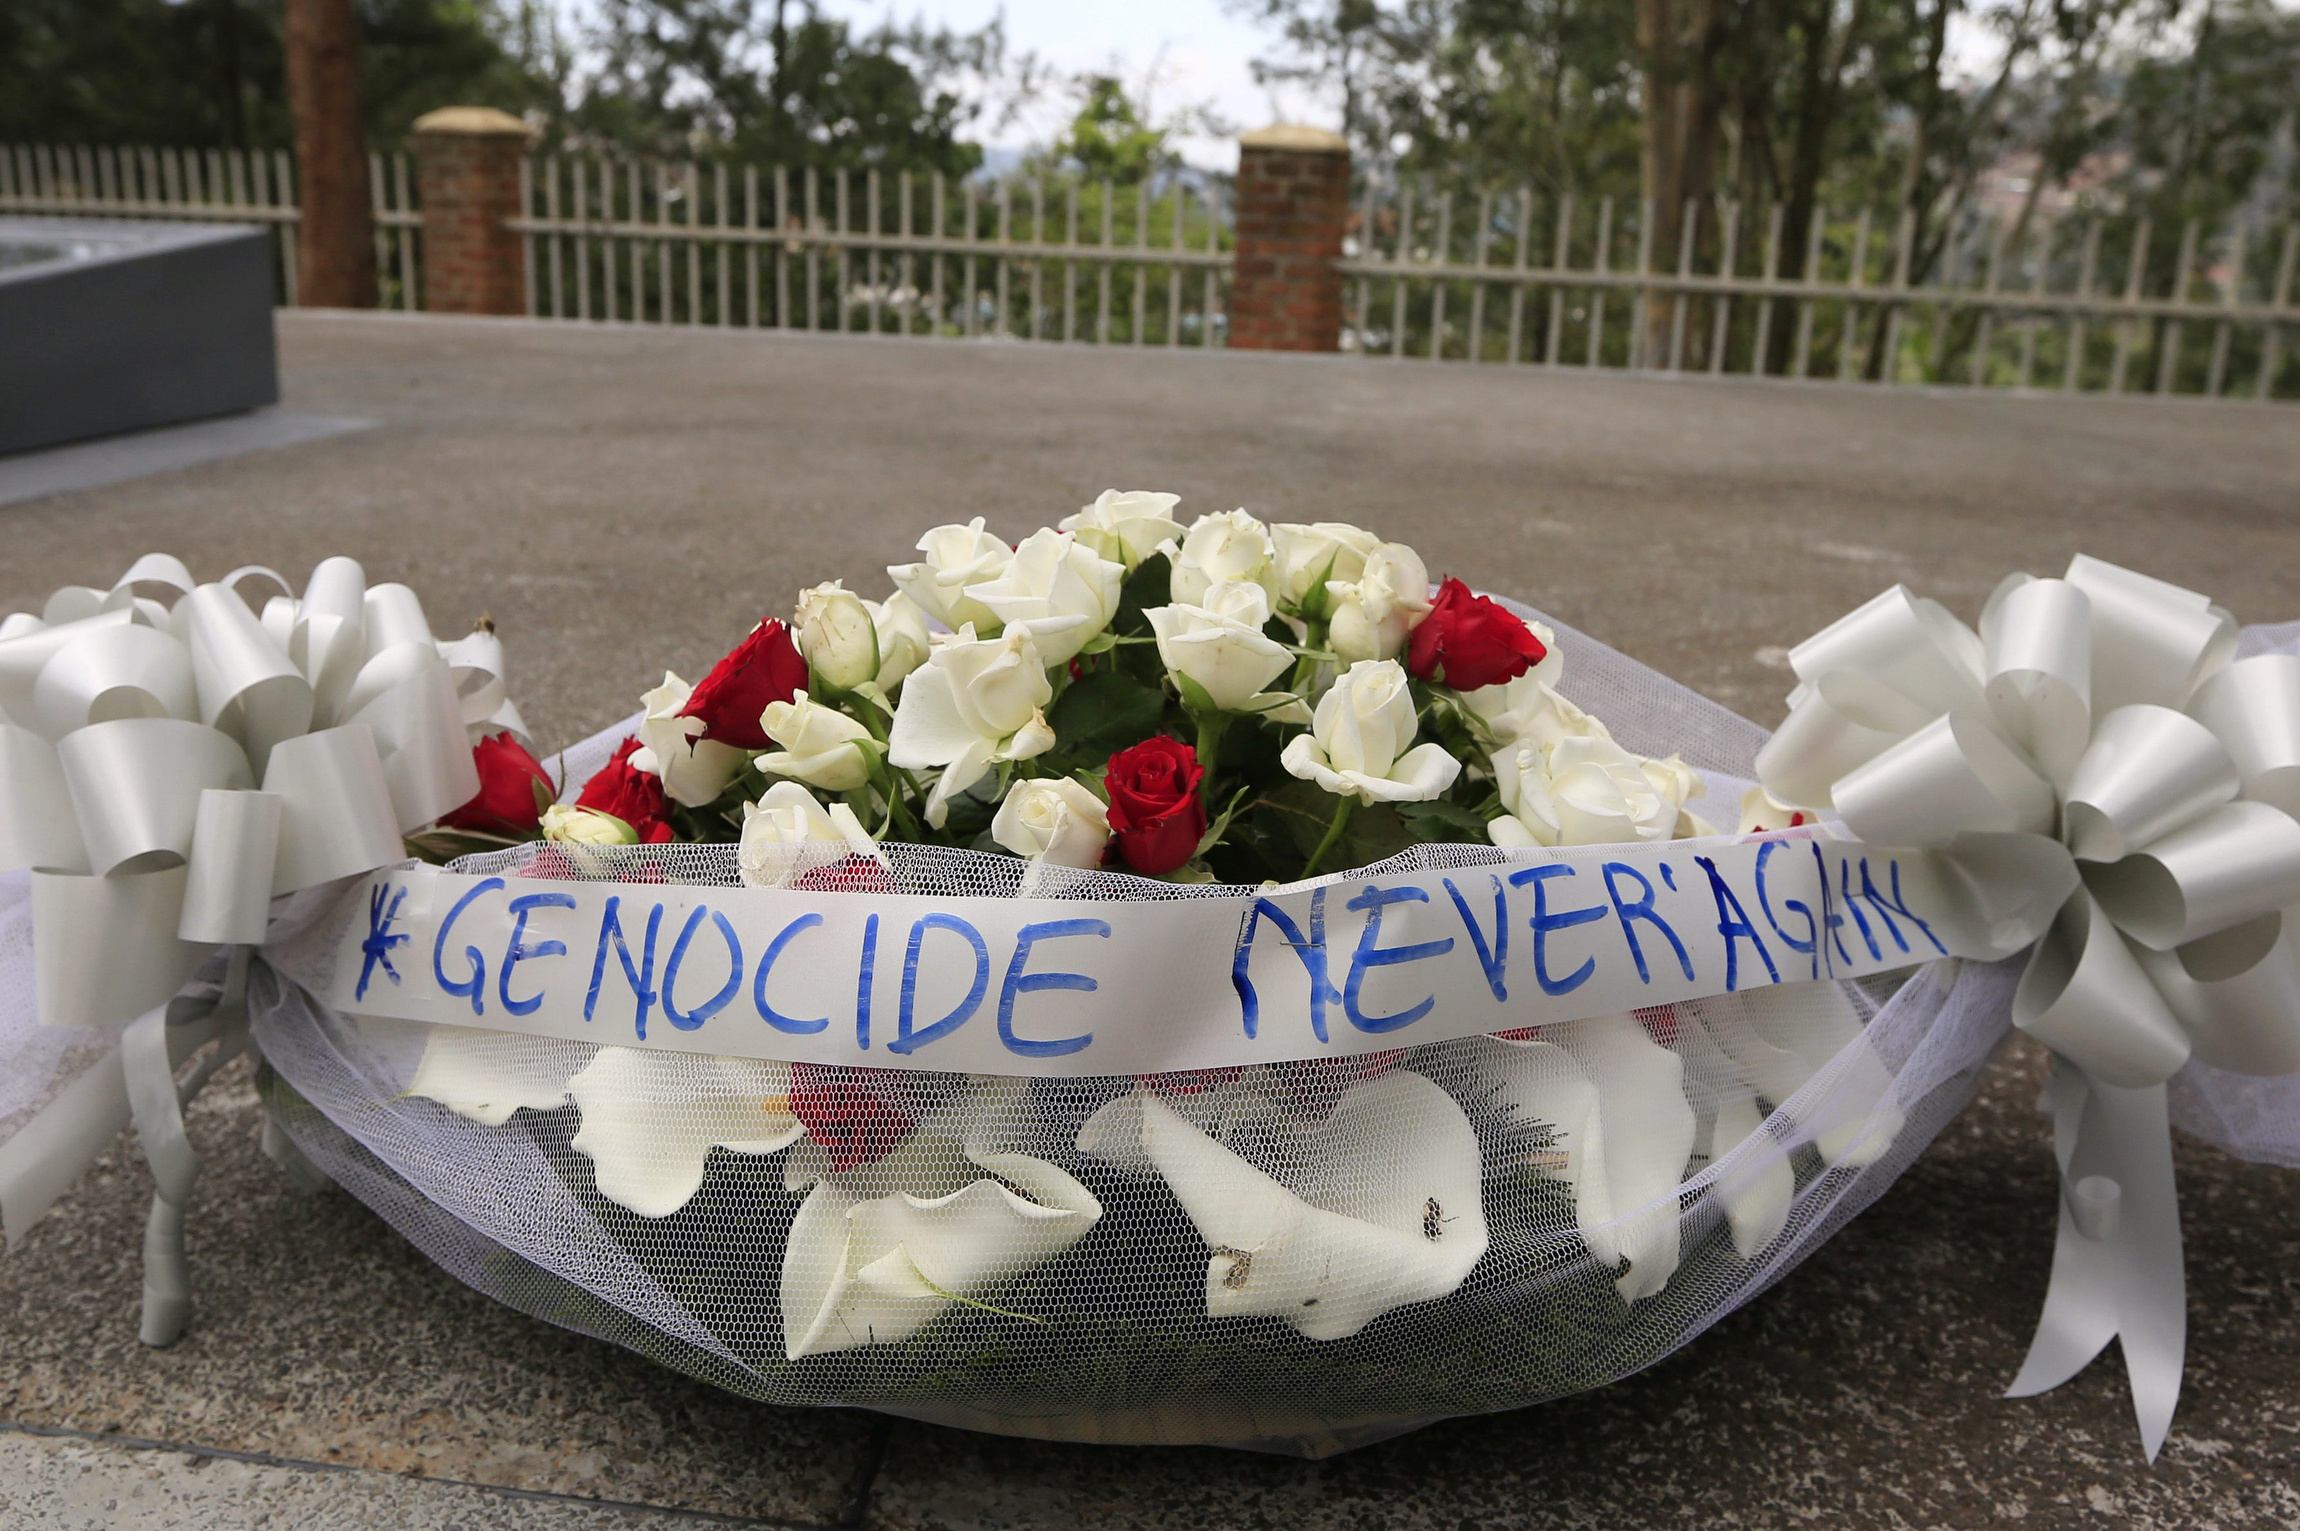 Rwanda commemorates genocide anniversary                     www.catholicsun.org